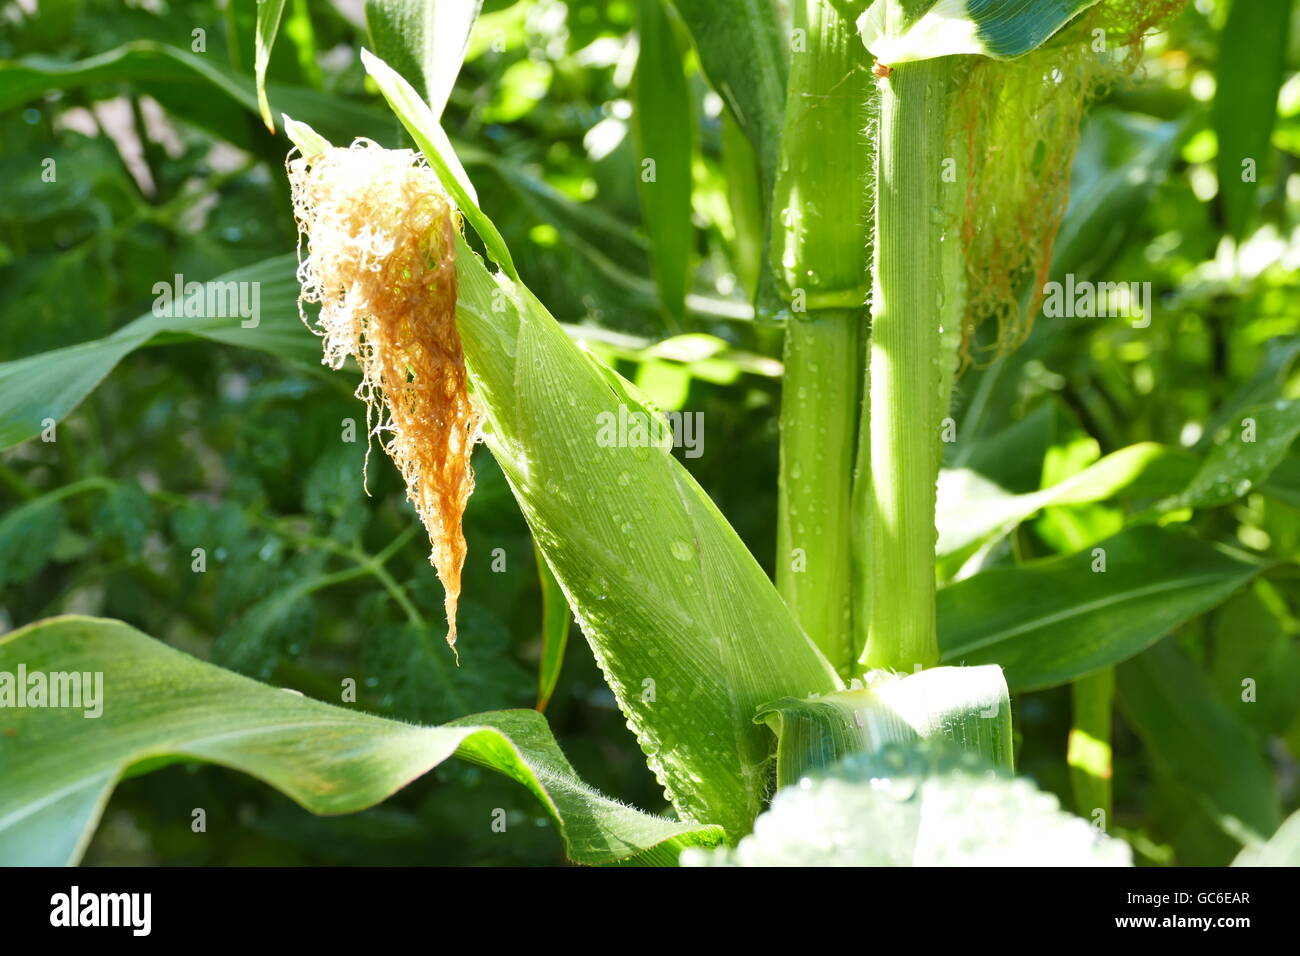 Growing corn in farm garden at Los Angeles Stock Photo